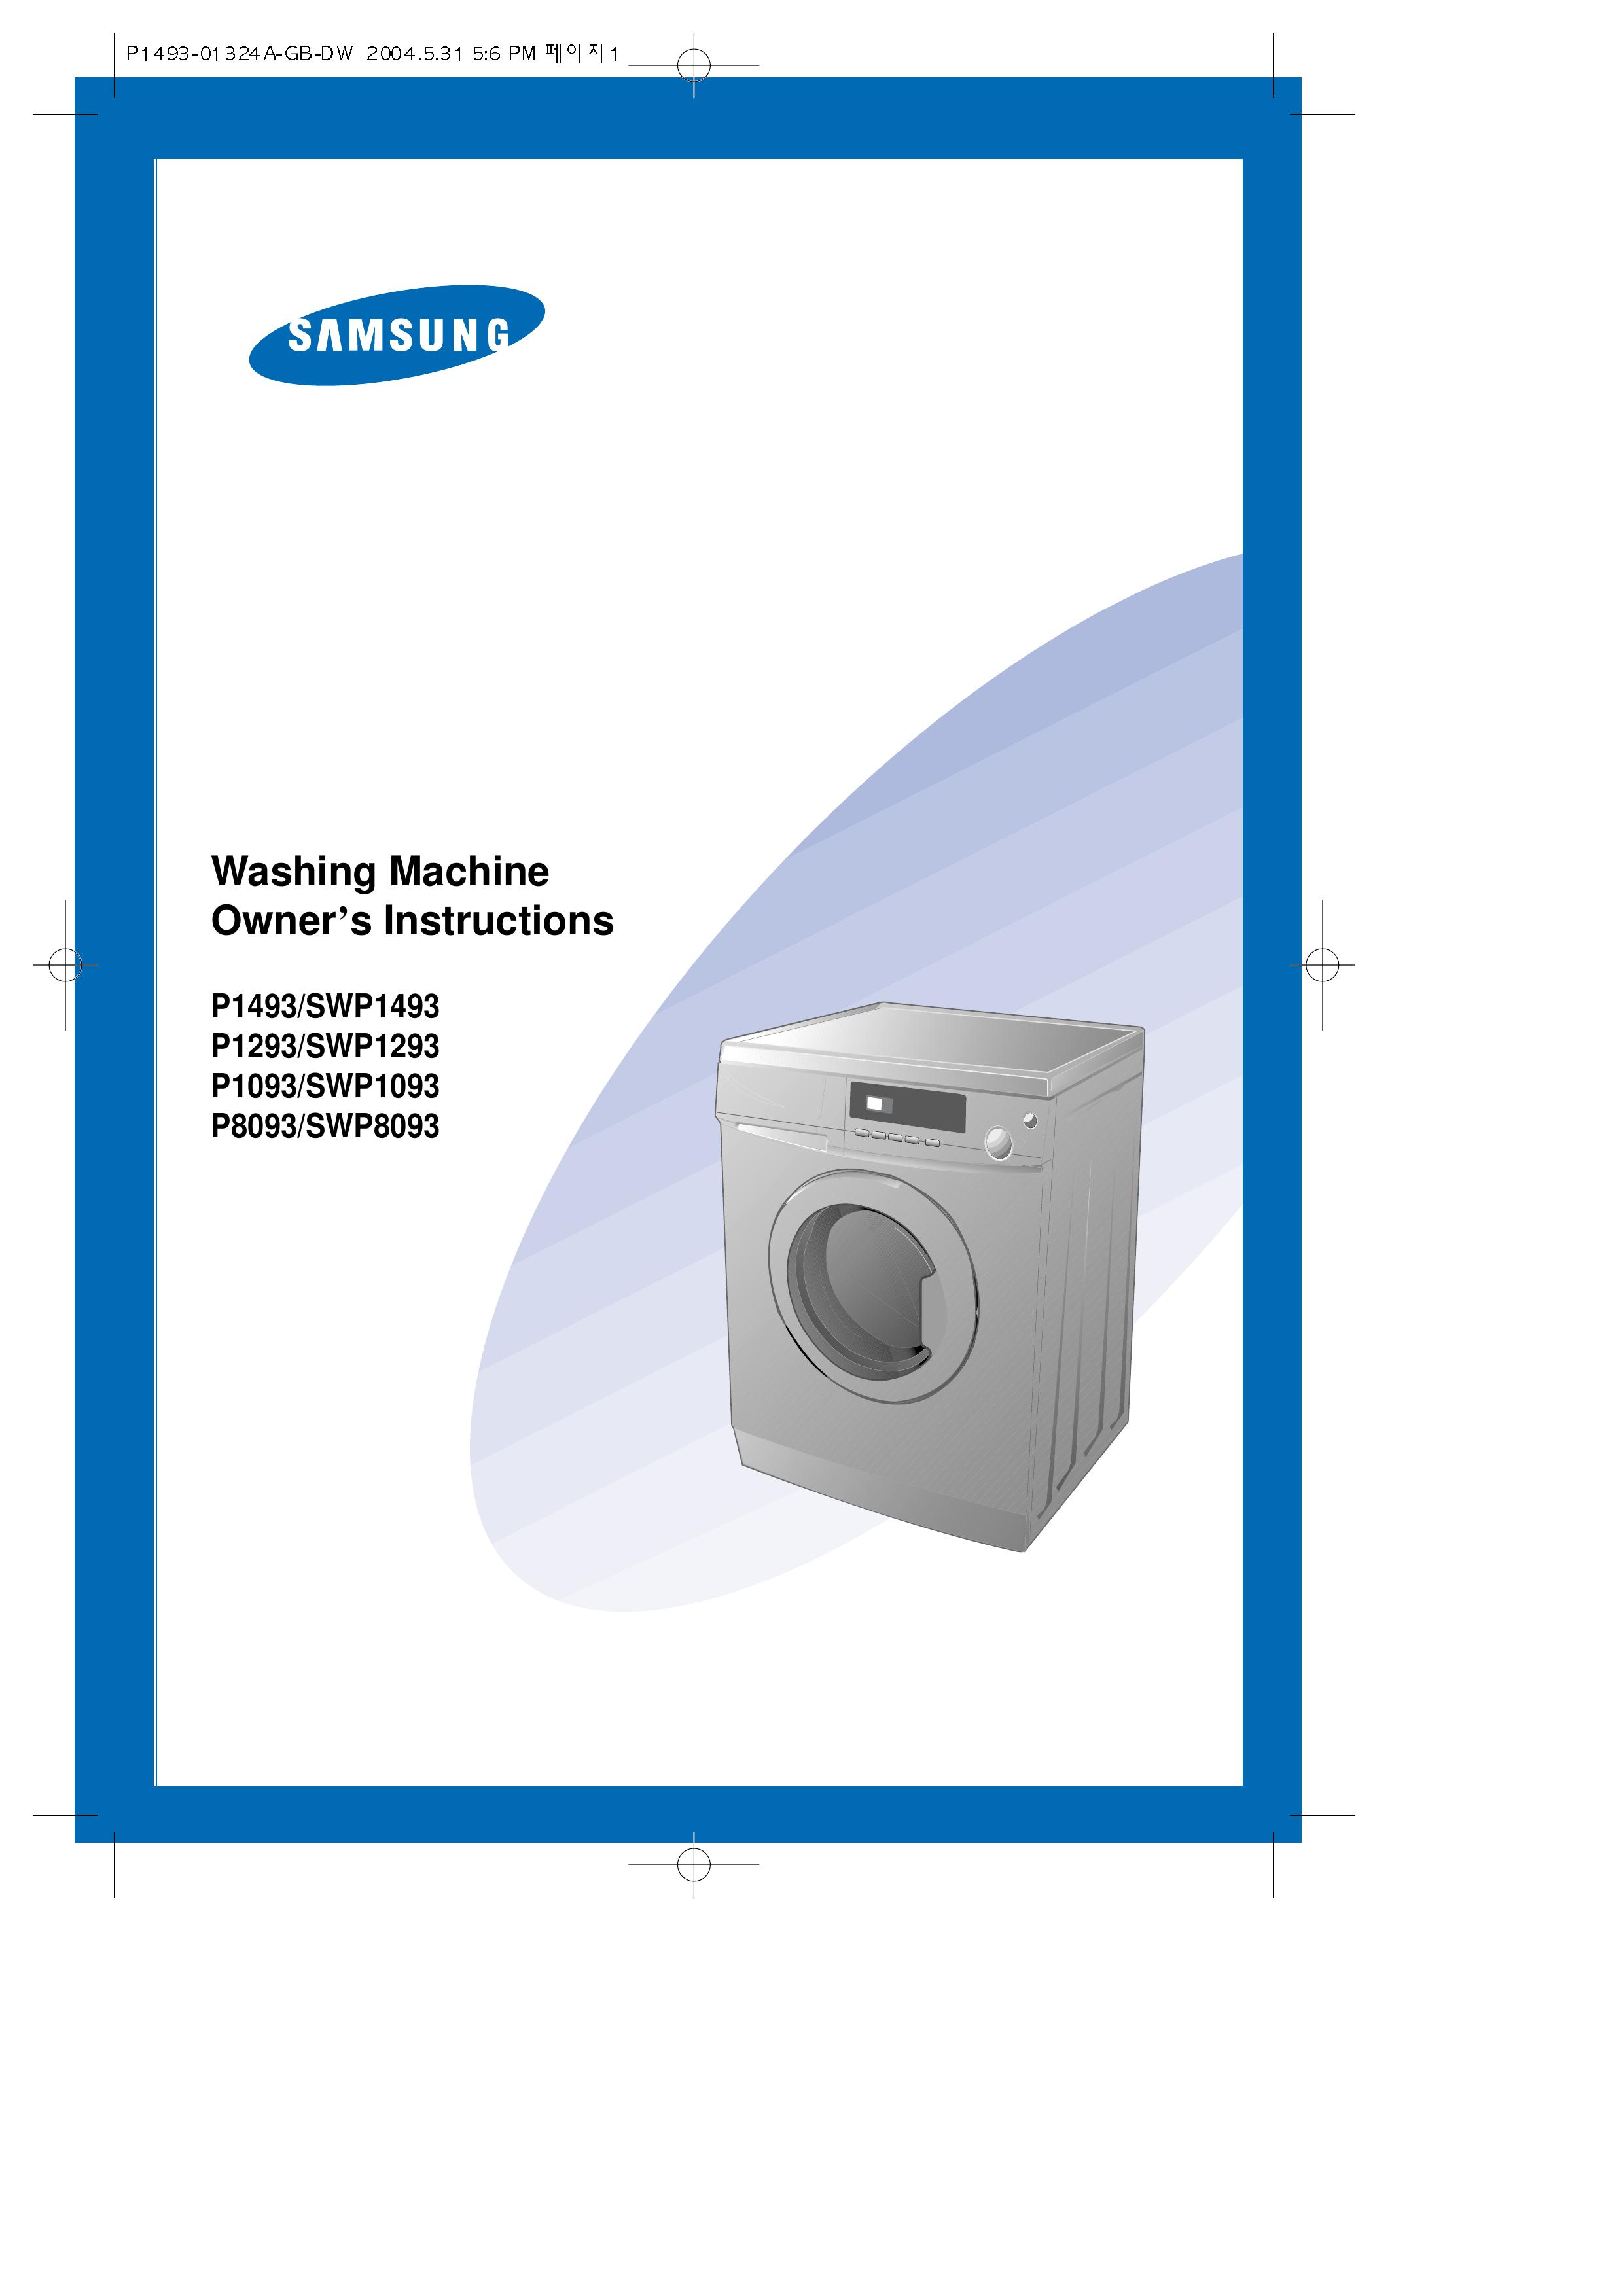 Samsung P8093 Washer/Dryer User Manual